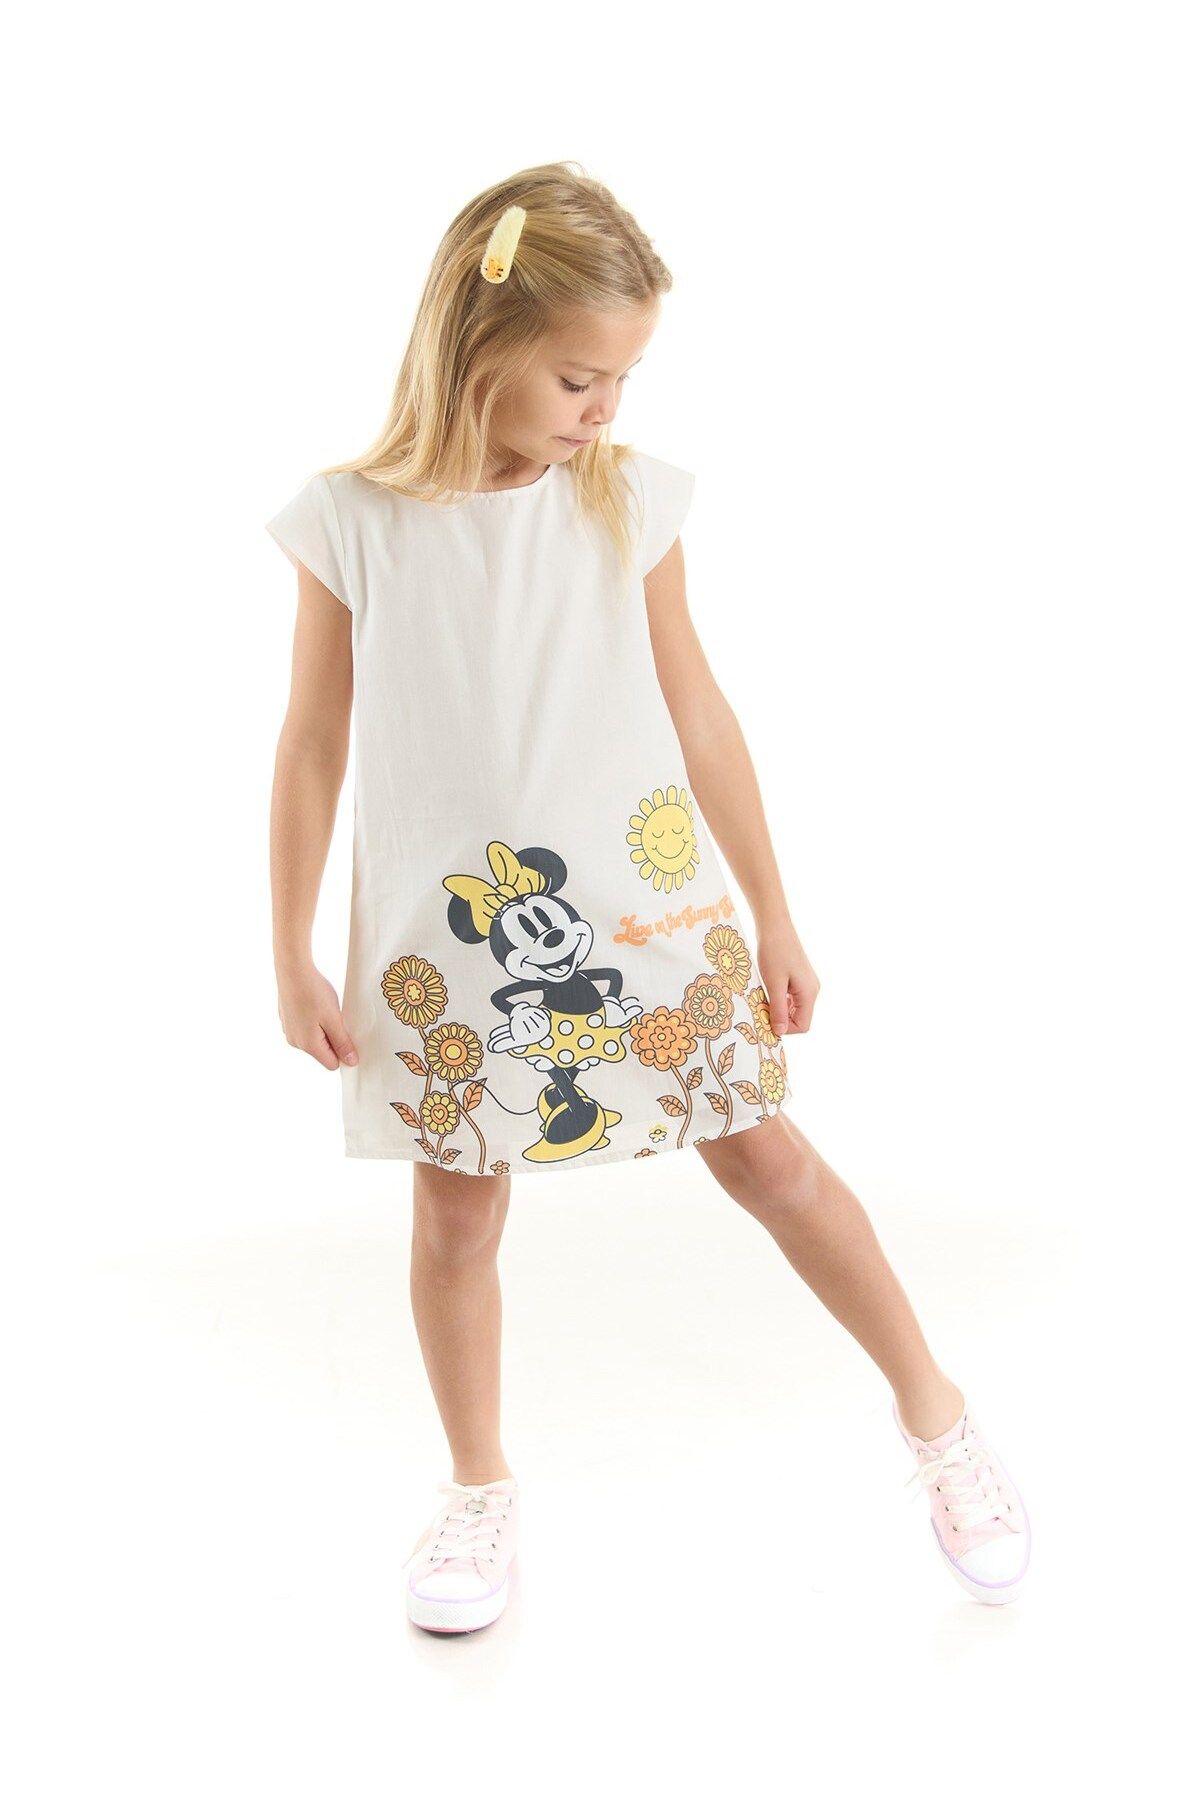 MINNIE MOUSE Disney Lisanslı Kız Çocuk Kısa Kol Elbise 20918